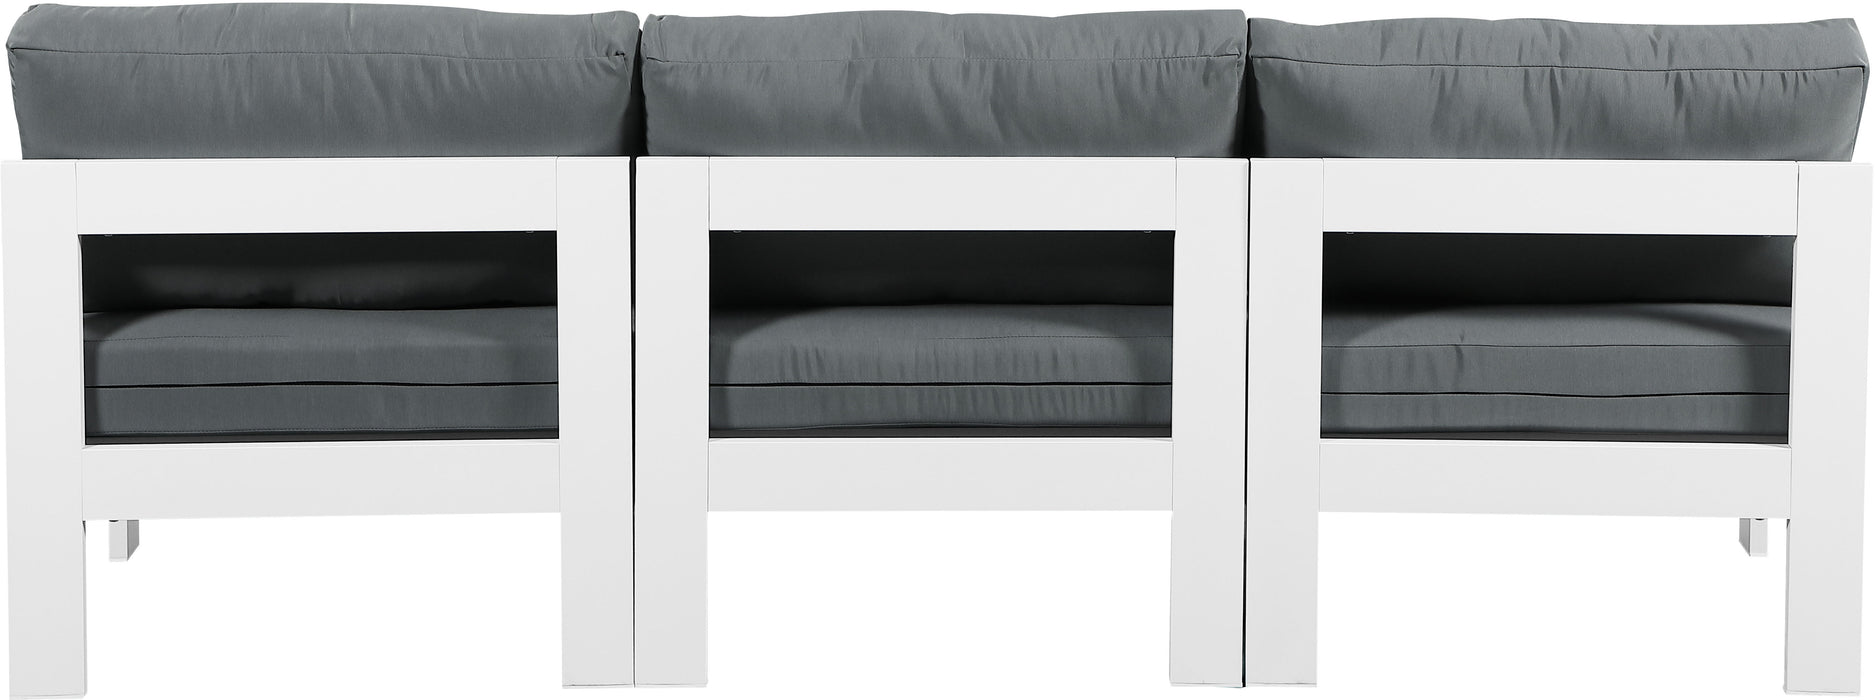 Nizuc - Outdoor Patio Modular Sofa - Grey - Fabric